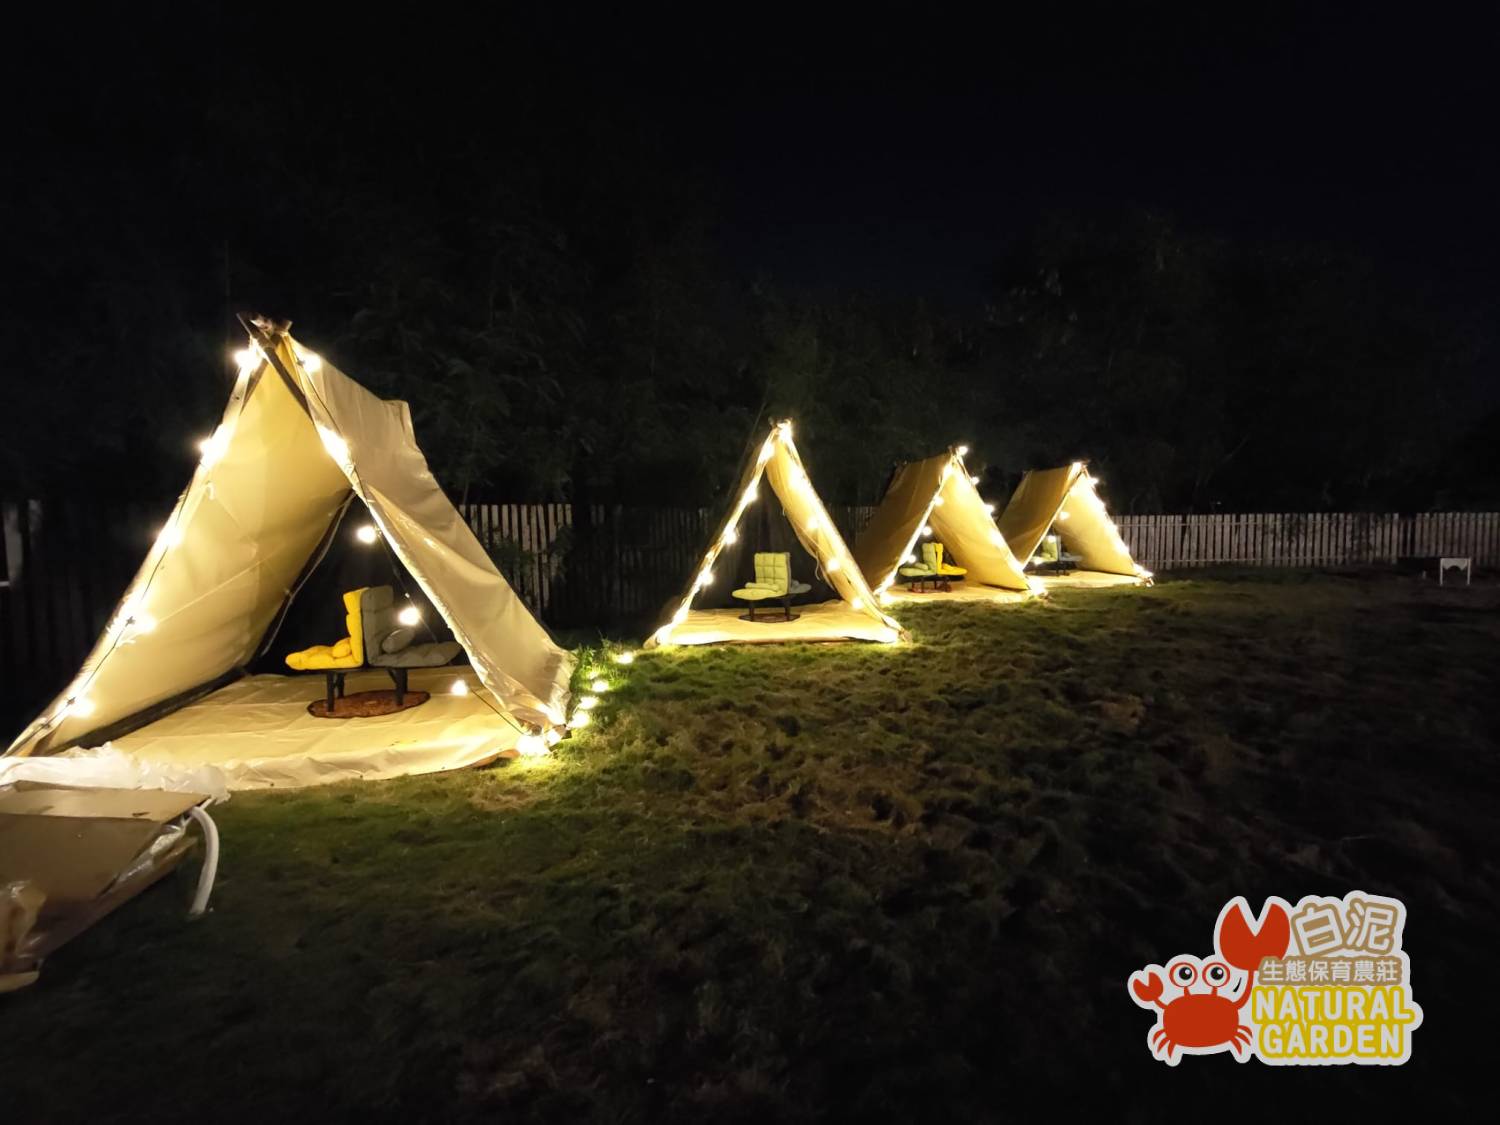 Natural Garden - Camping Site in Yuen Long Natural Garden - Car Camping/ Camping  (Camping Rental/BYOT) 3